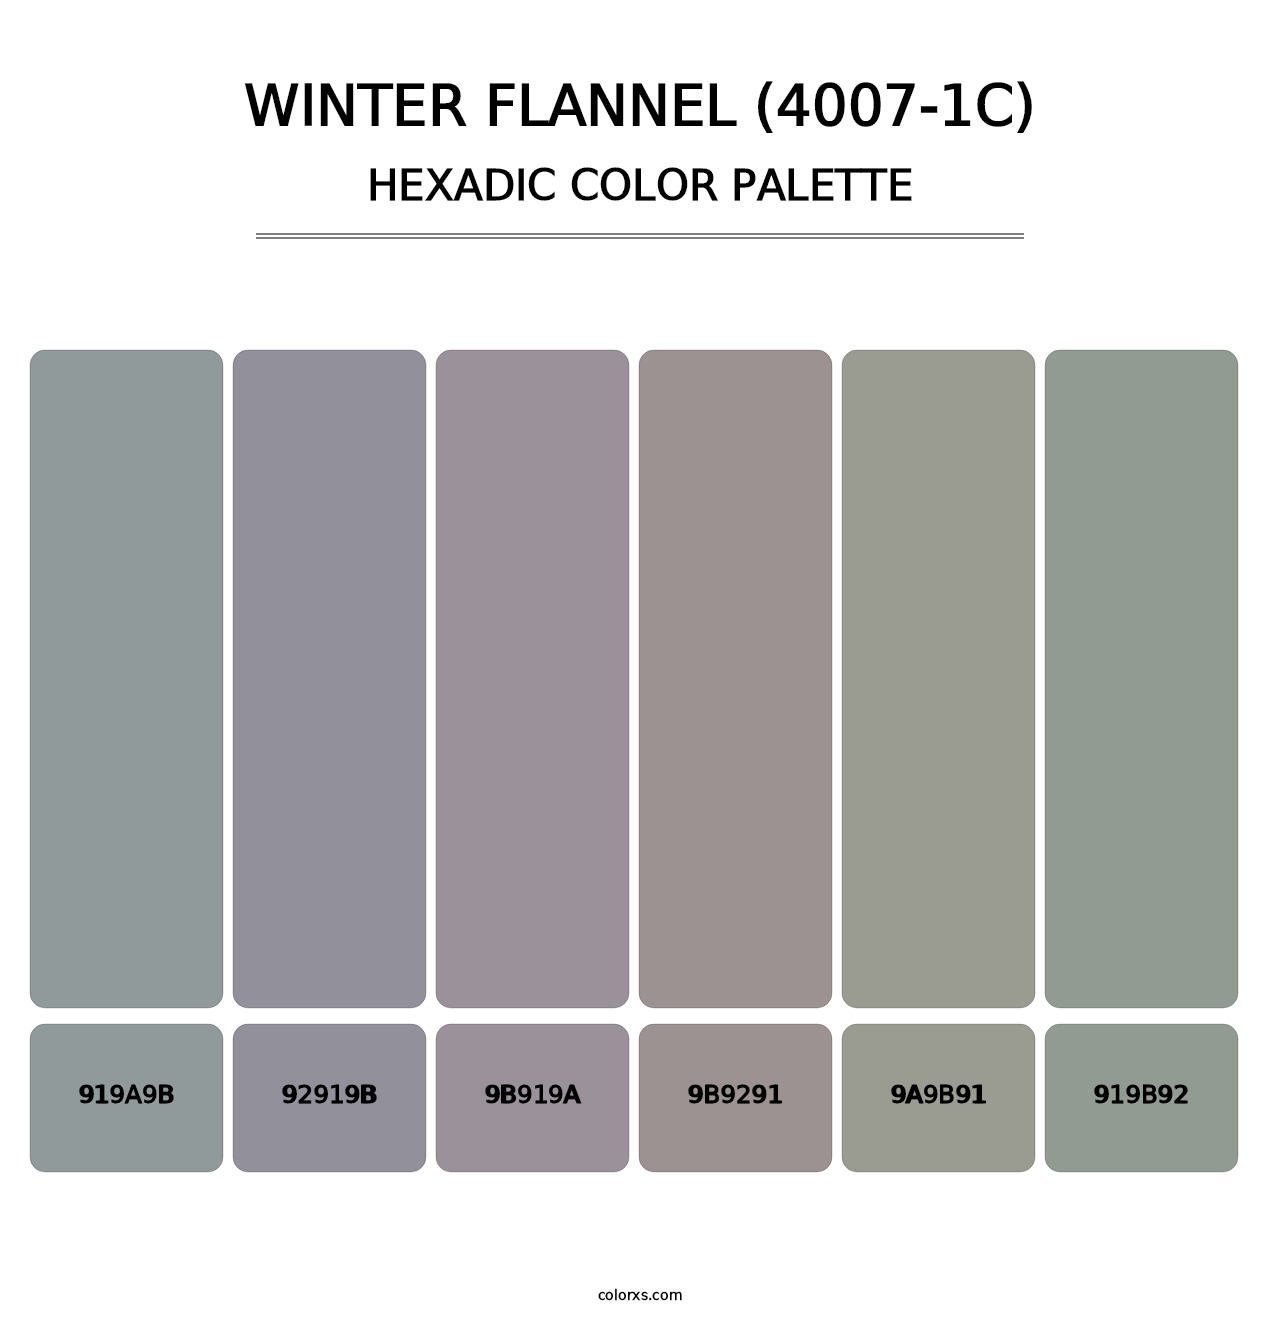 Winter Flannel (4007-1C) - Hexadic Color Palette